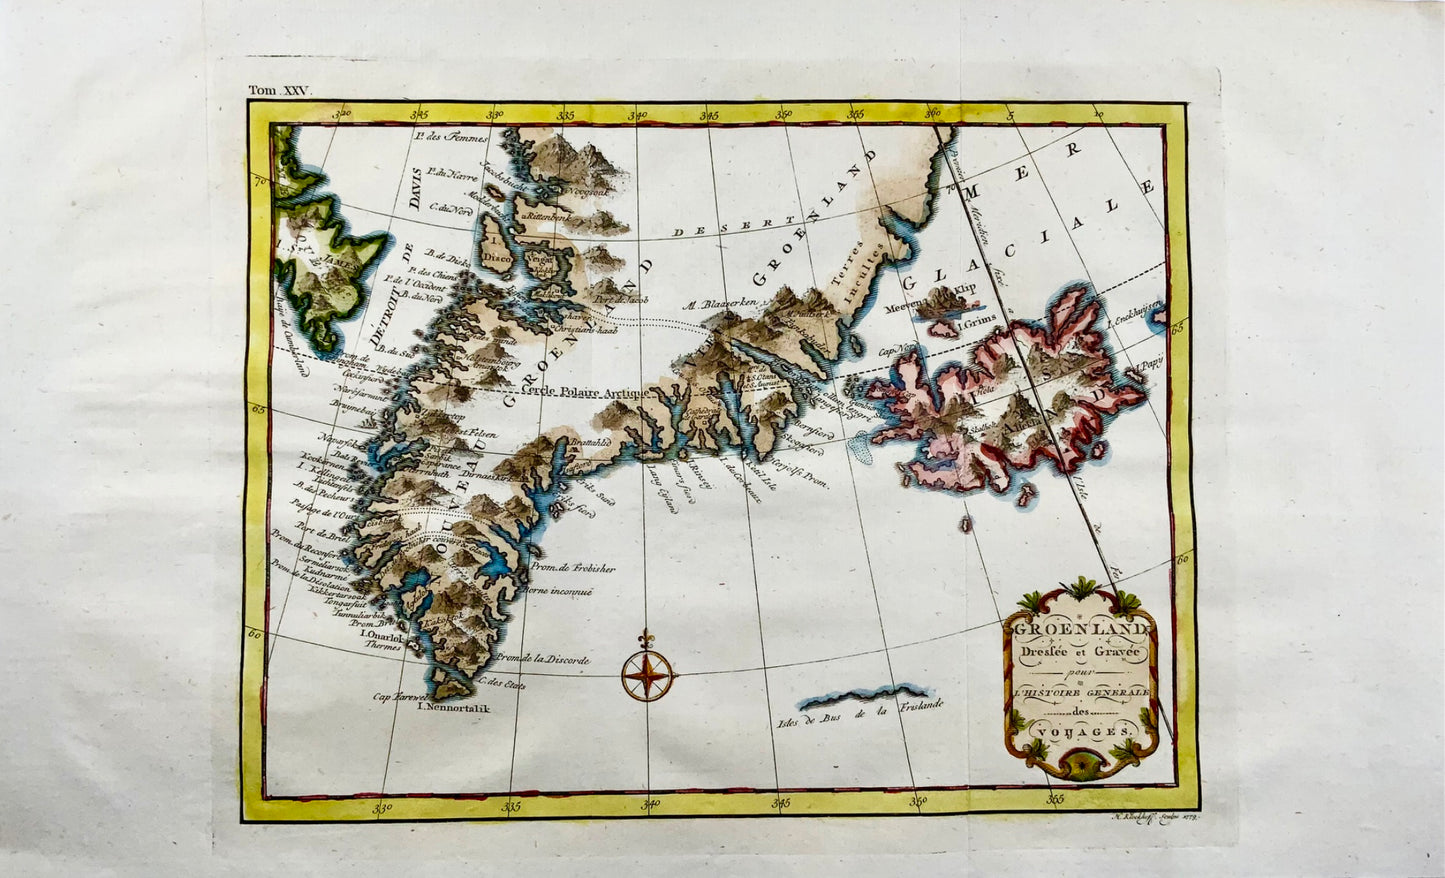 1779 H. Klockhoff, Groenland, Groenland, Islande, Arctique, carte colorée à la main, voyage